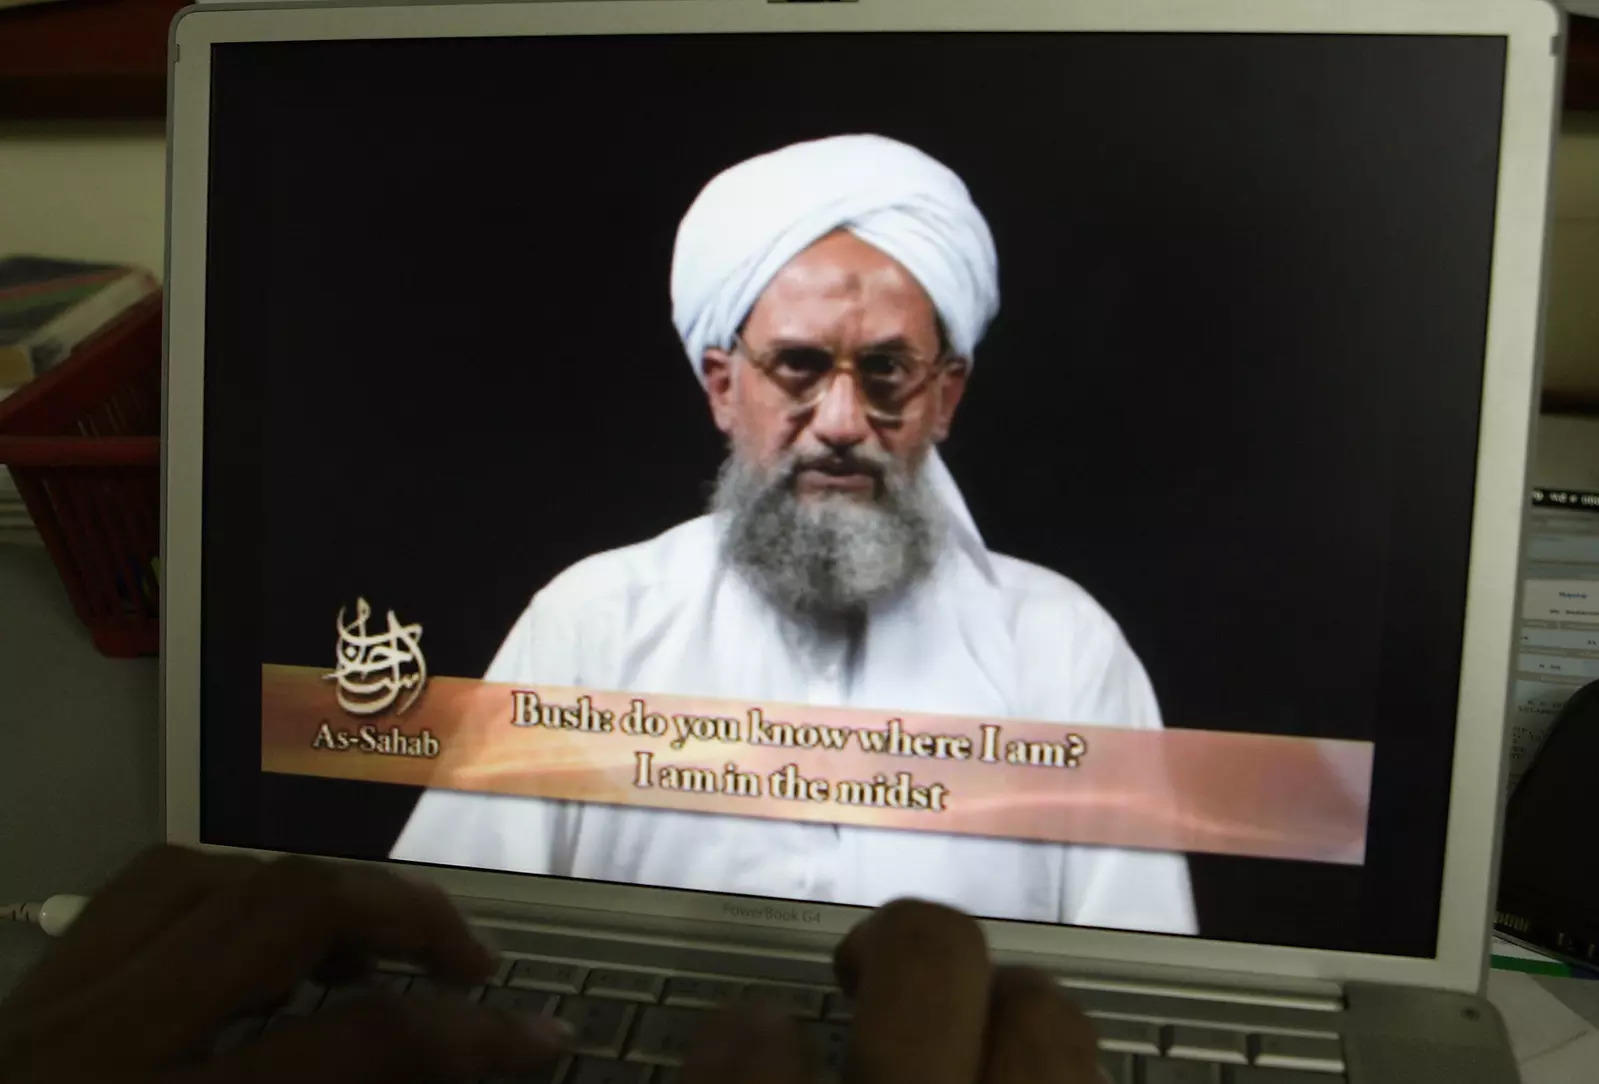 Al-Qaida leader Ayman al-Zawahiri killed in CIA drone strike, US officials say